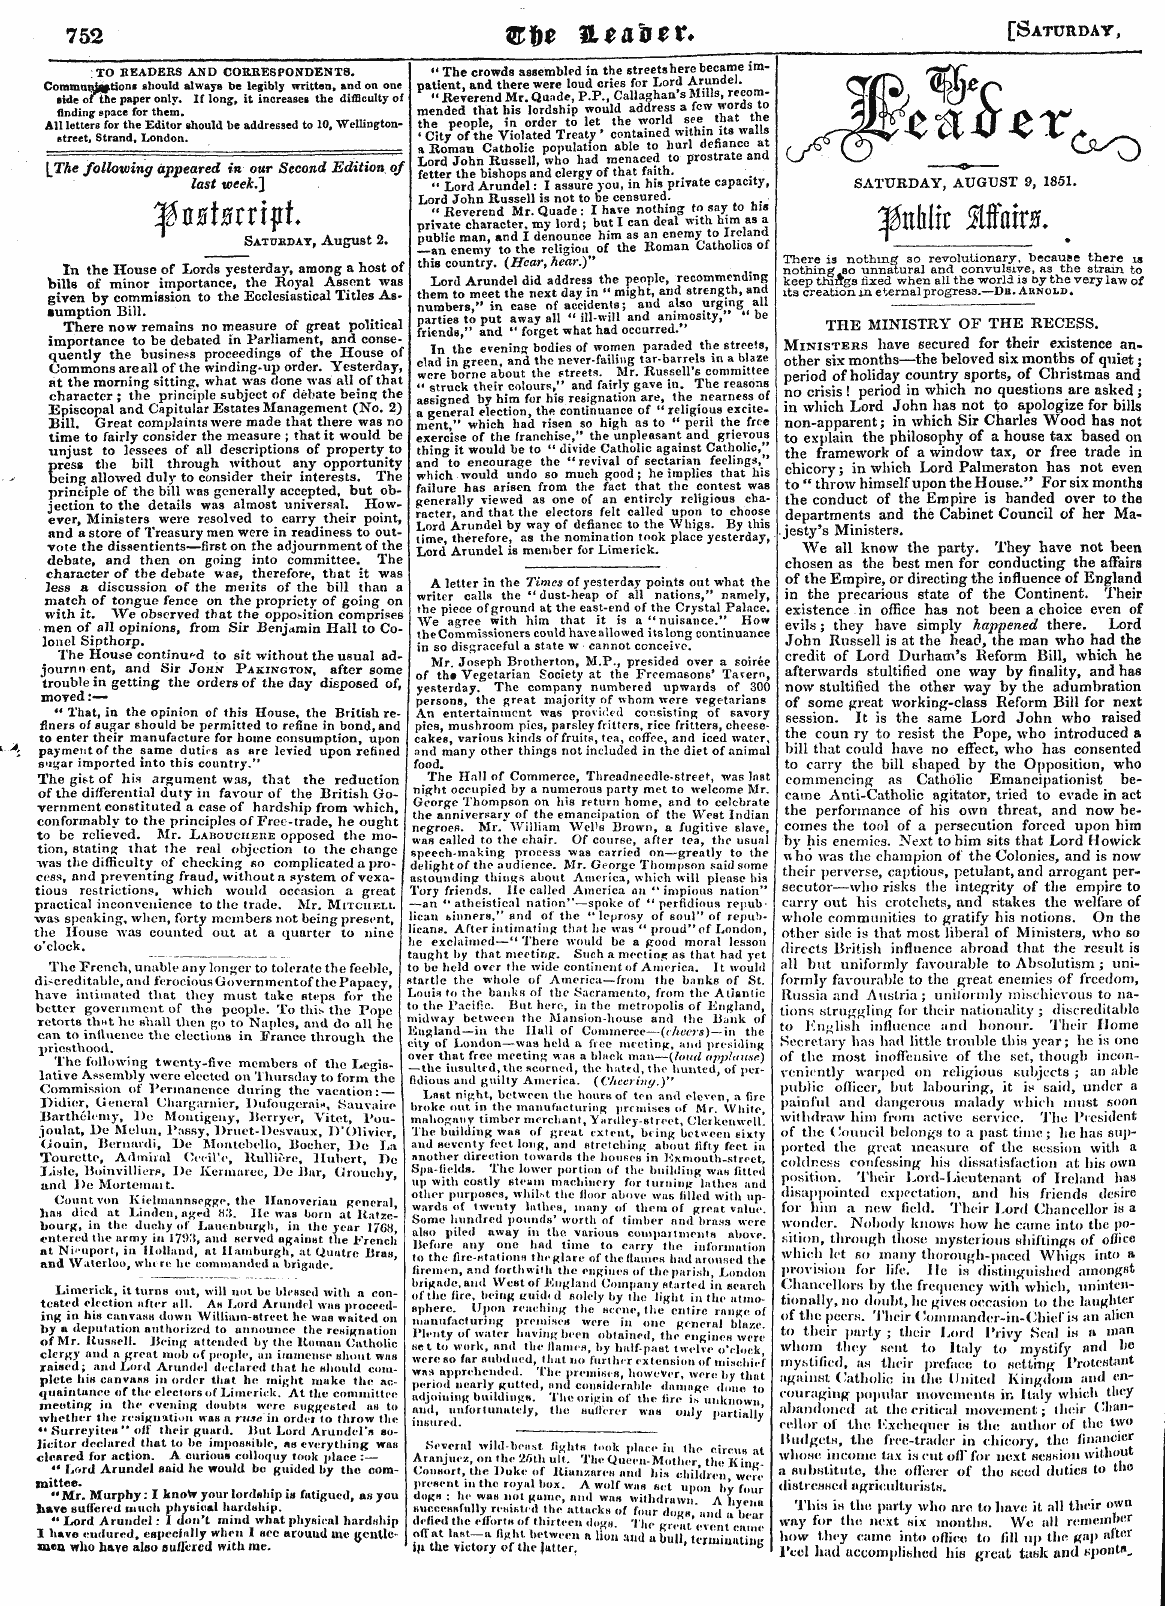 Leader (1850-1860): jS F Y, Country edition - 752 Sfte Vlta^Et. [Saturday,